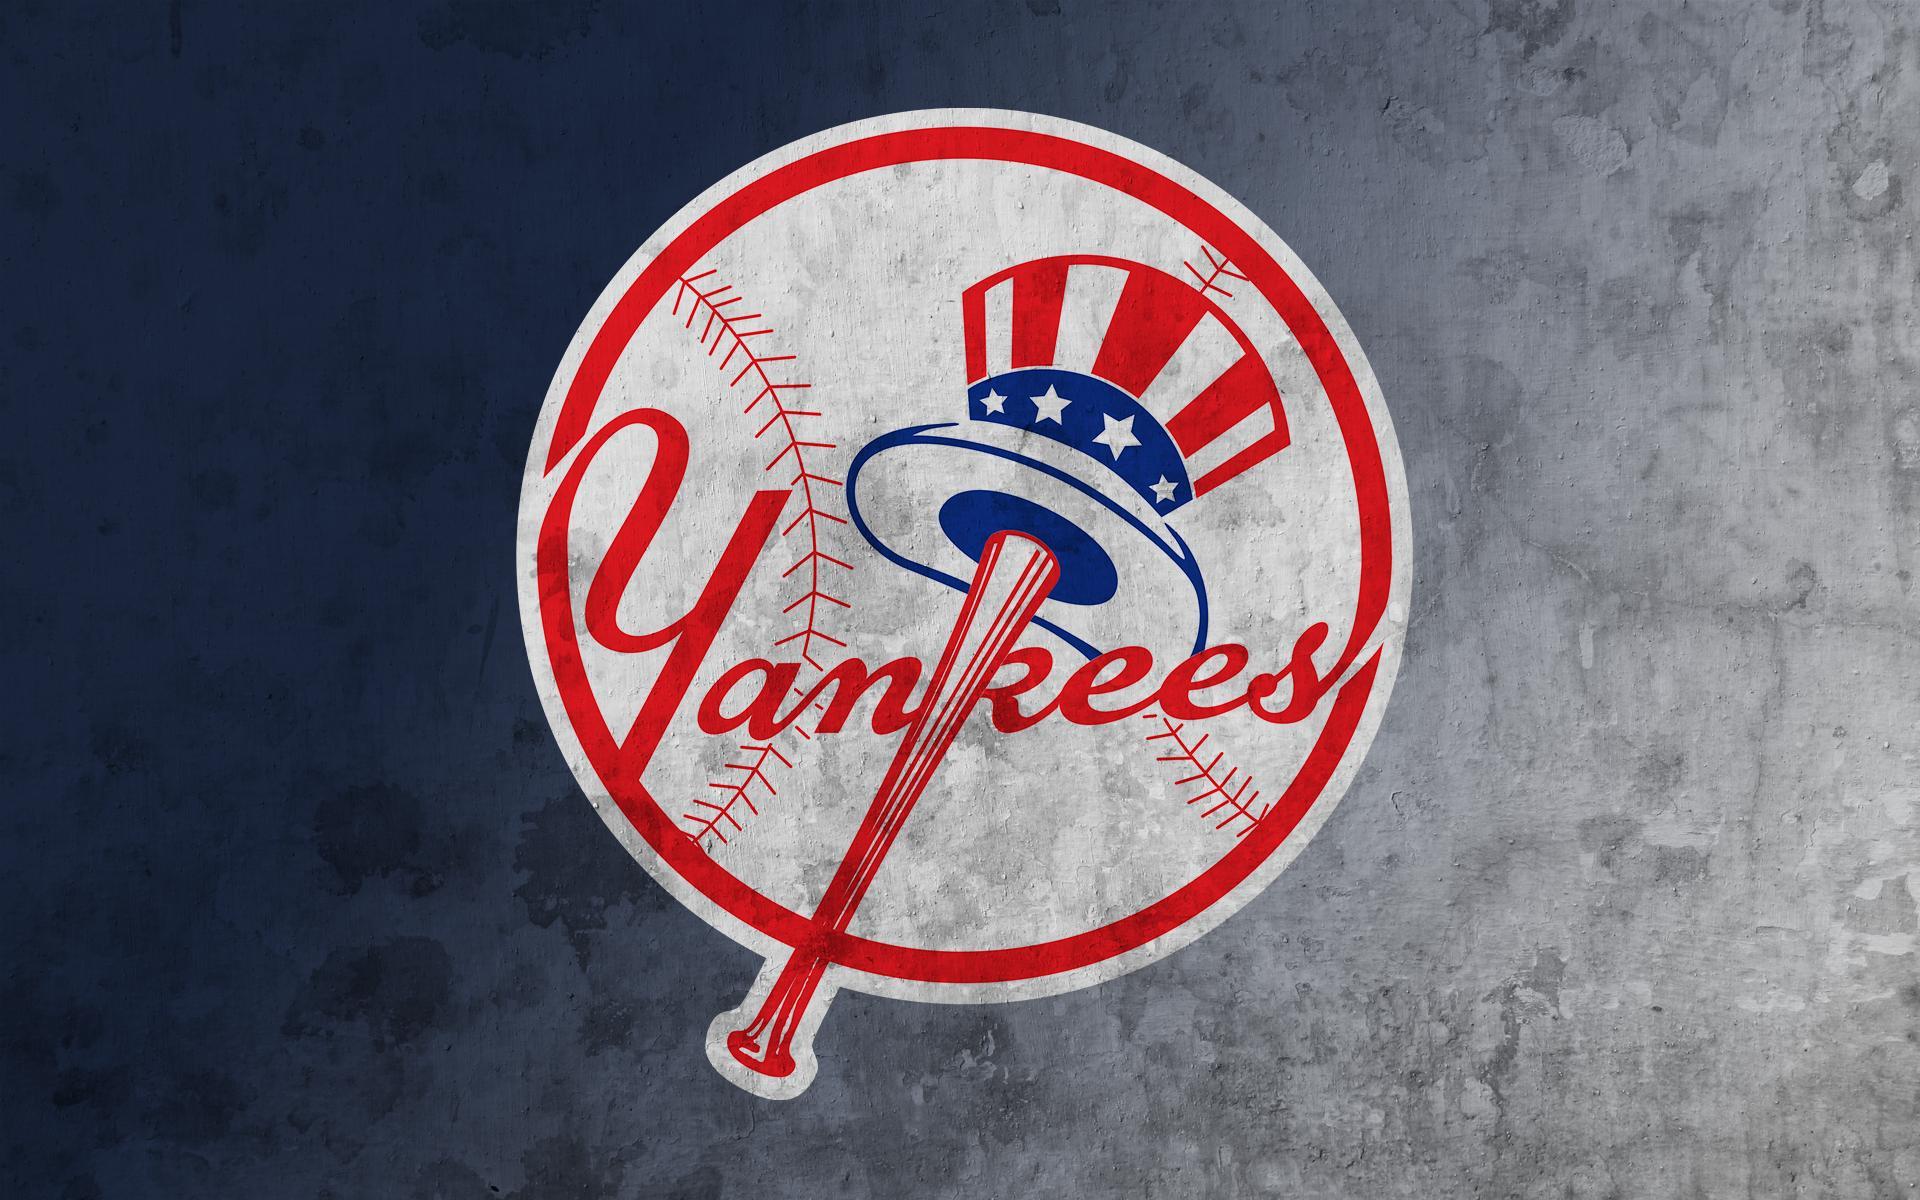 New York Yankees Team Logo - New York Yankees Team Logo Wallpaper | PaperPull